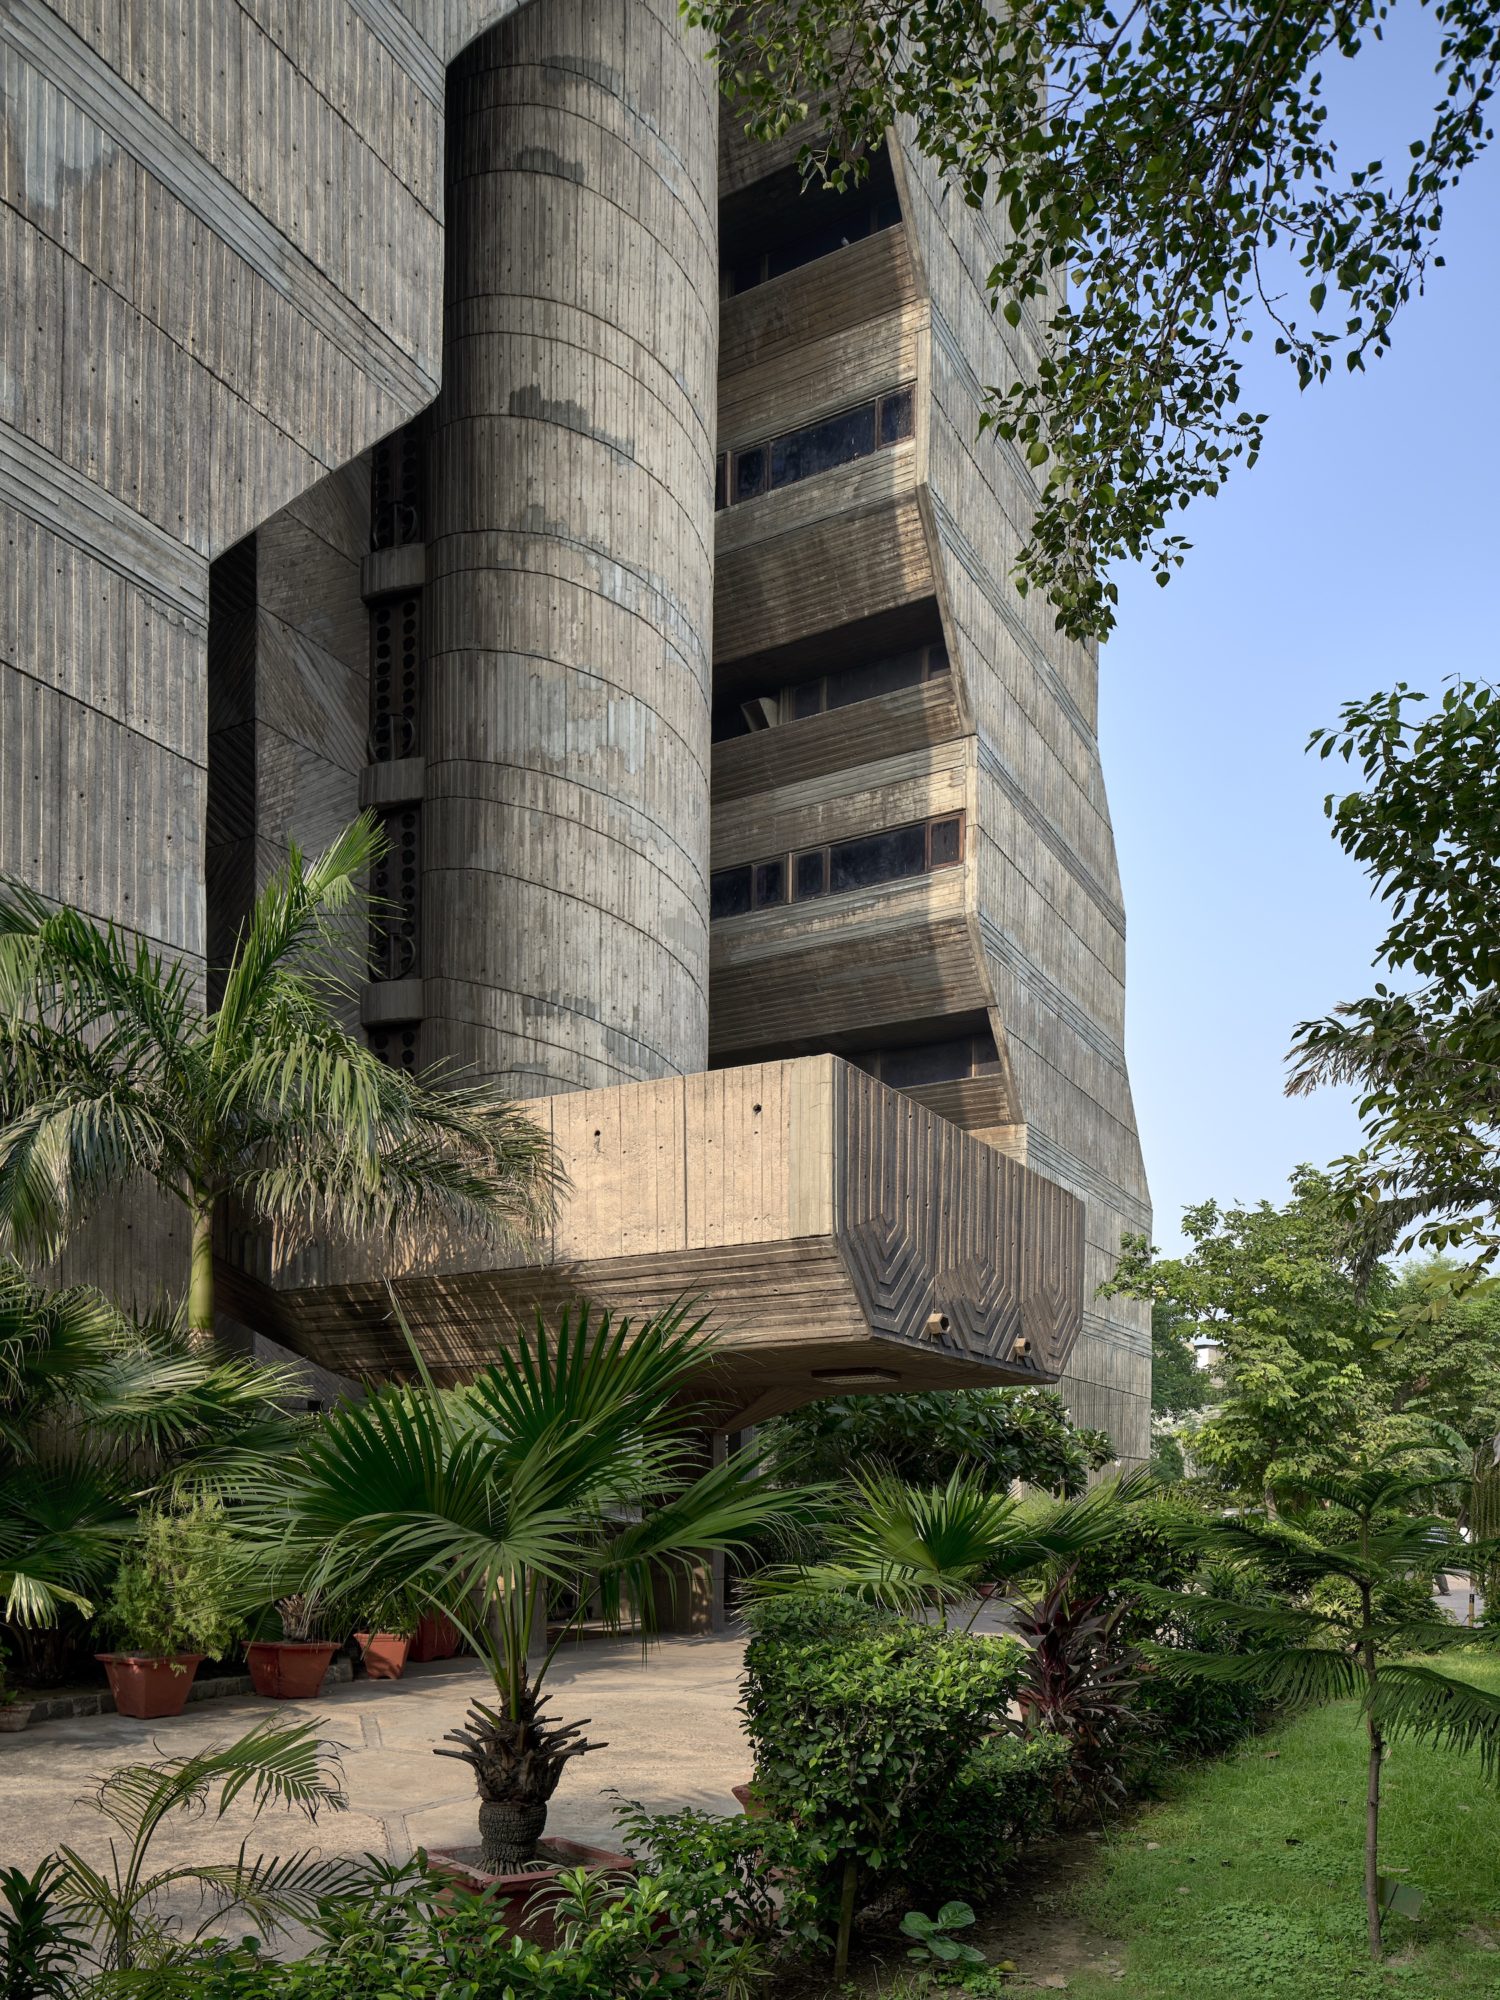 National Cooperative Development Corporation (NCDC) Office Building, New Delhi, India.